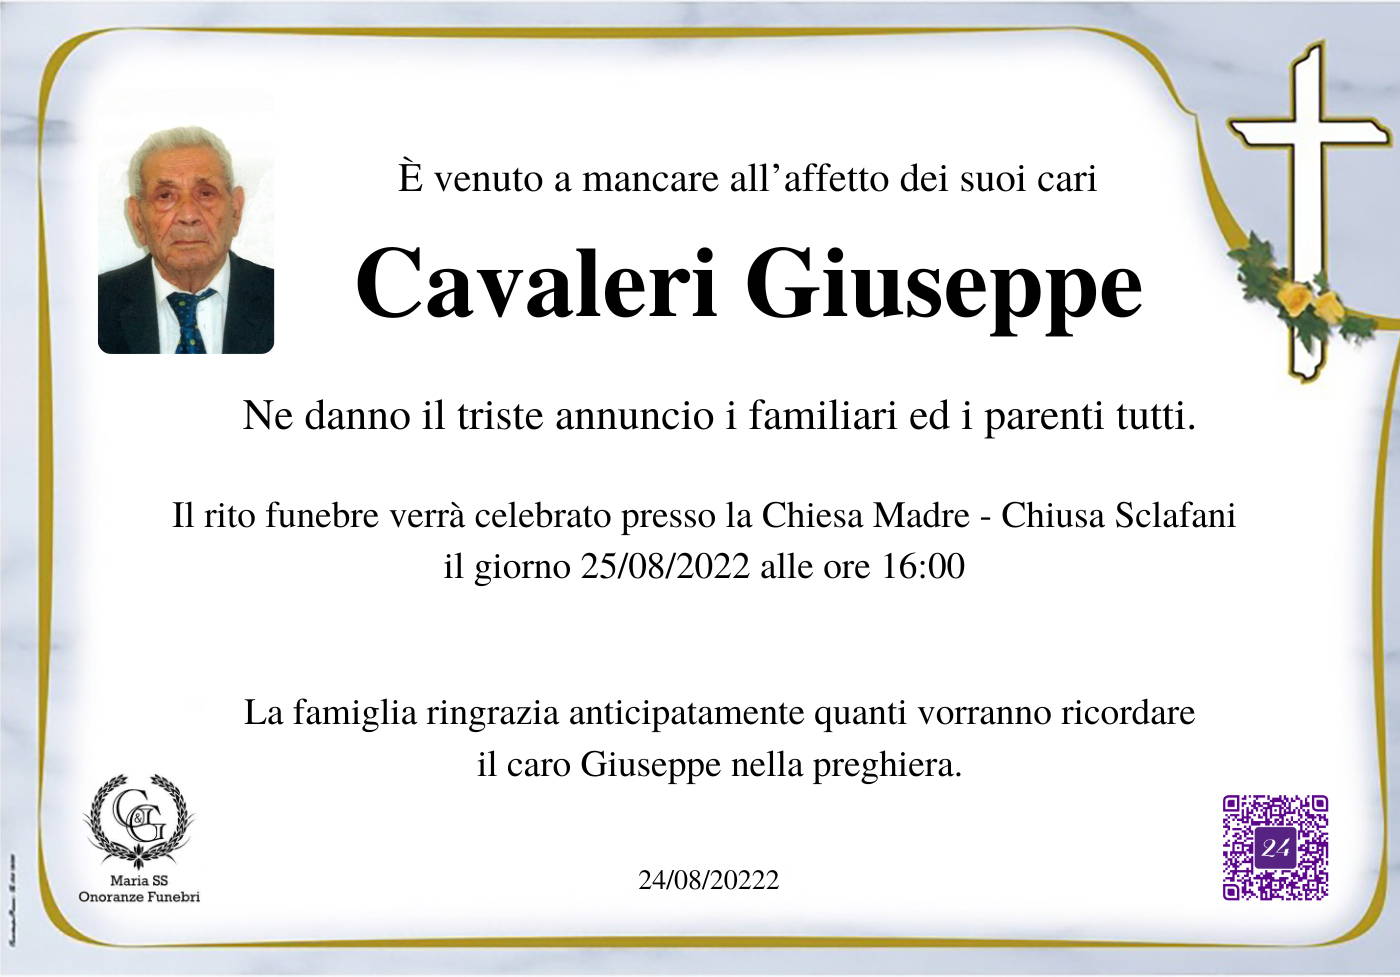 Giuseppe Cavaleri